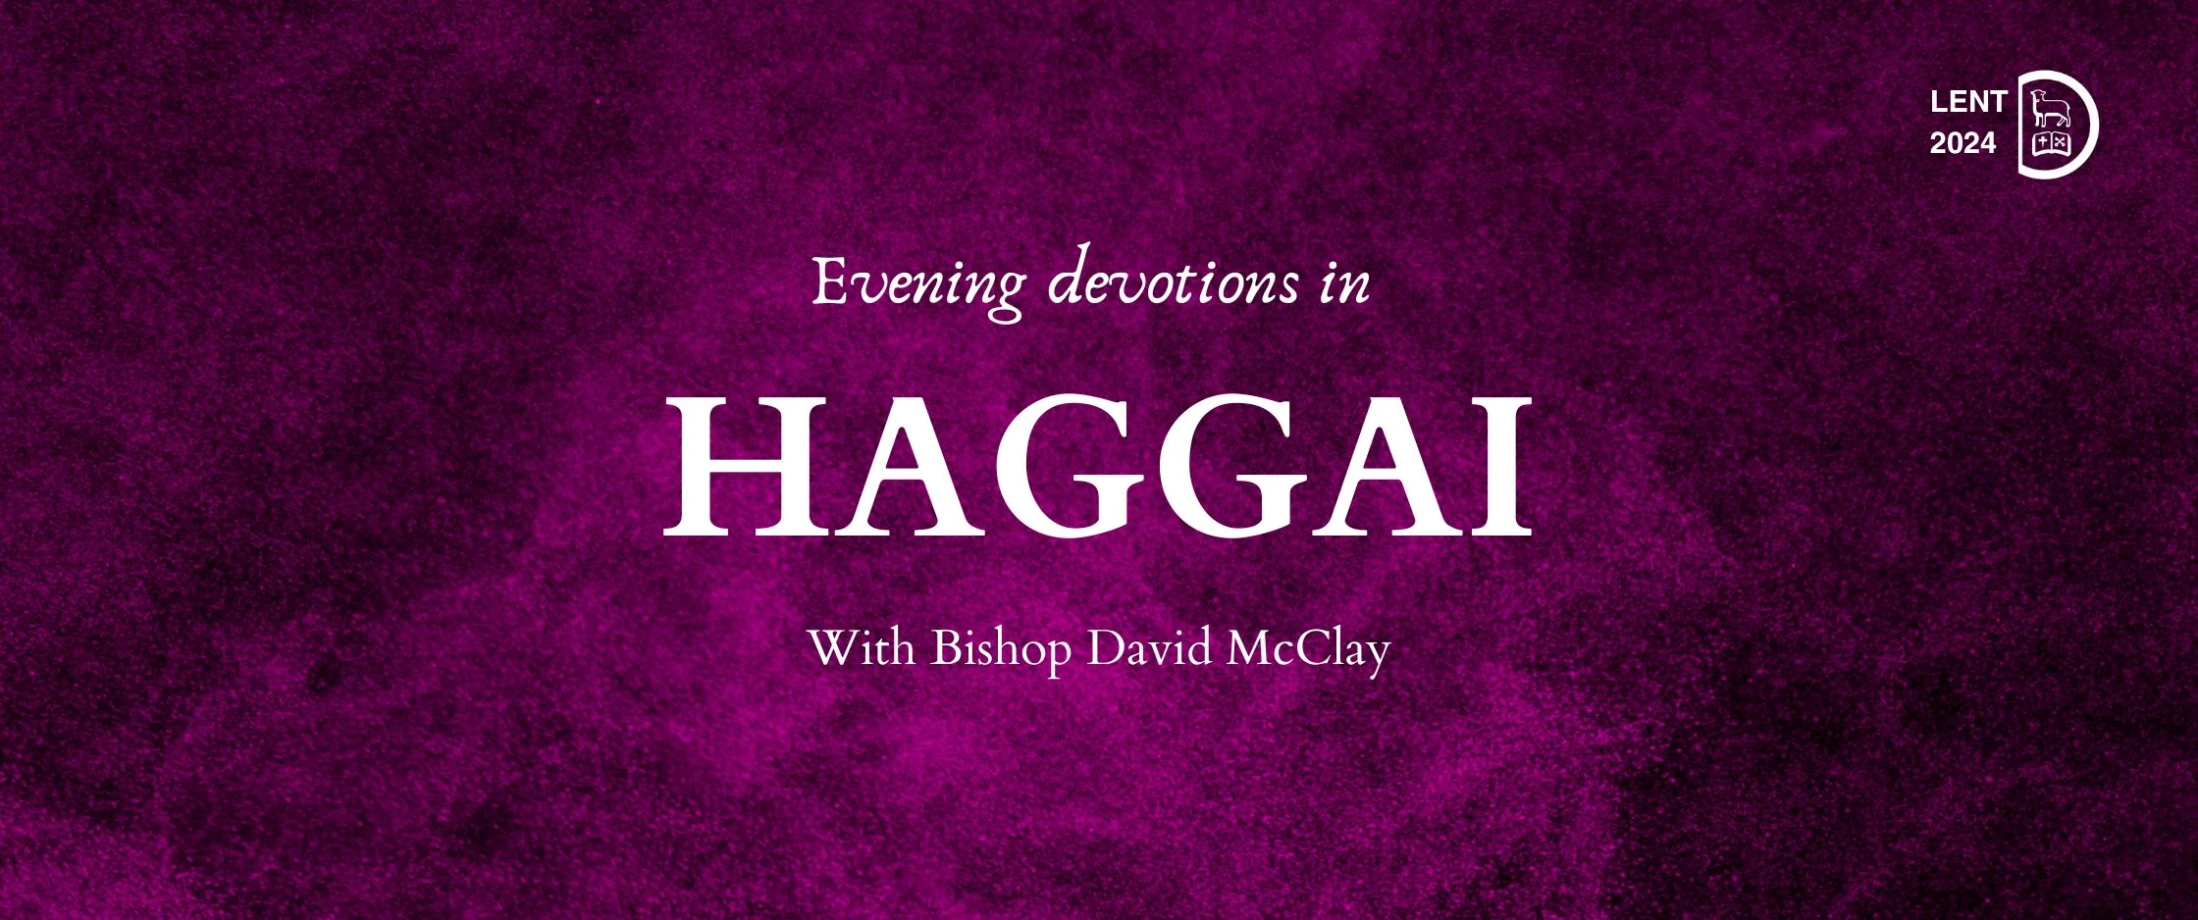 Day 29: Haggai 2:18&19